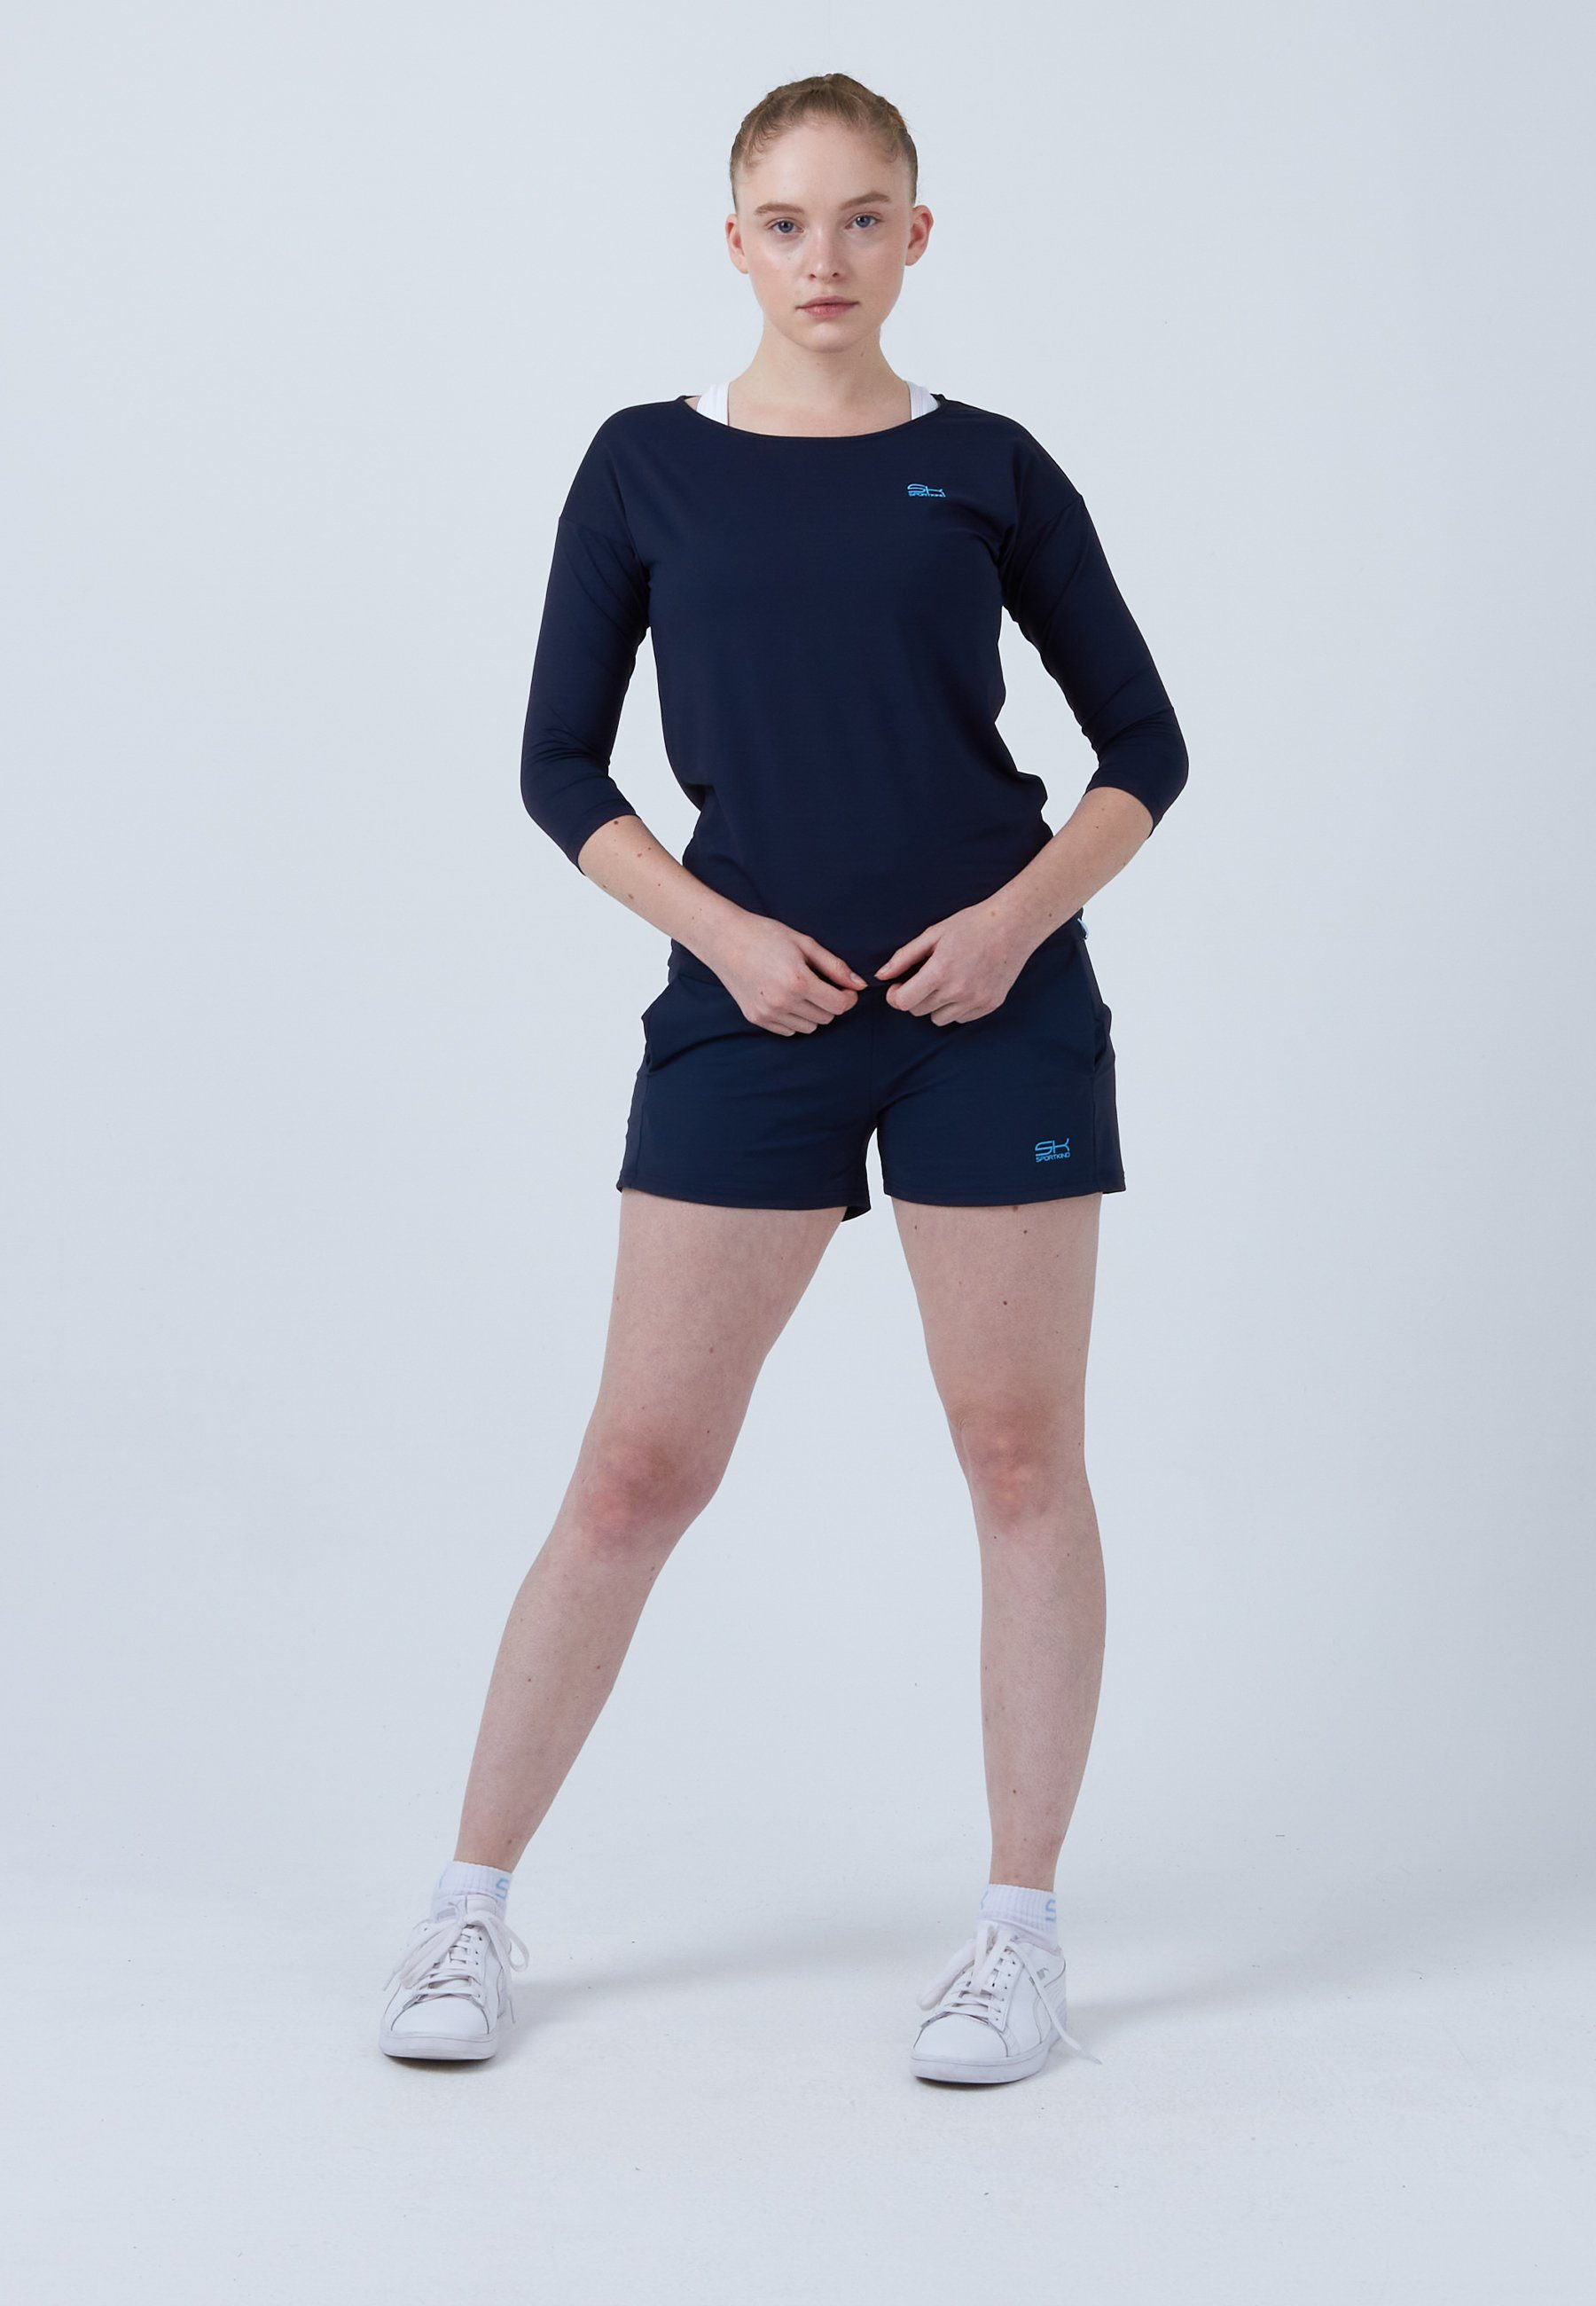 Mädchen Fit Damen SPORTKIND 3/4 Tennis Loose Funktionsshirt & Shirt blau navy